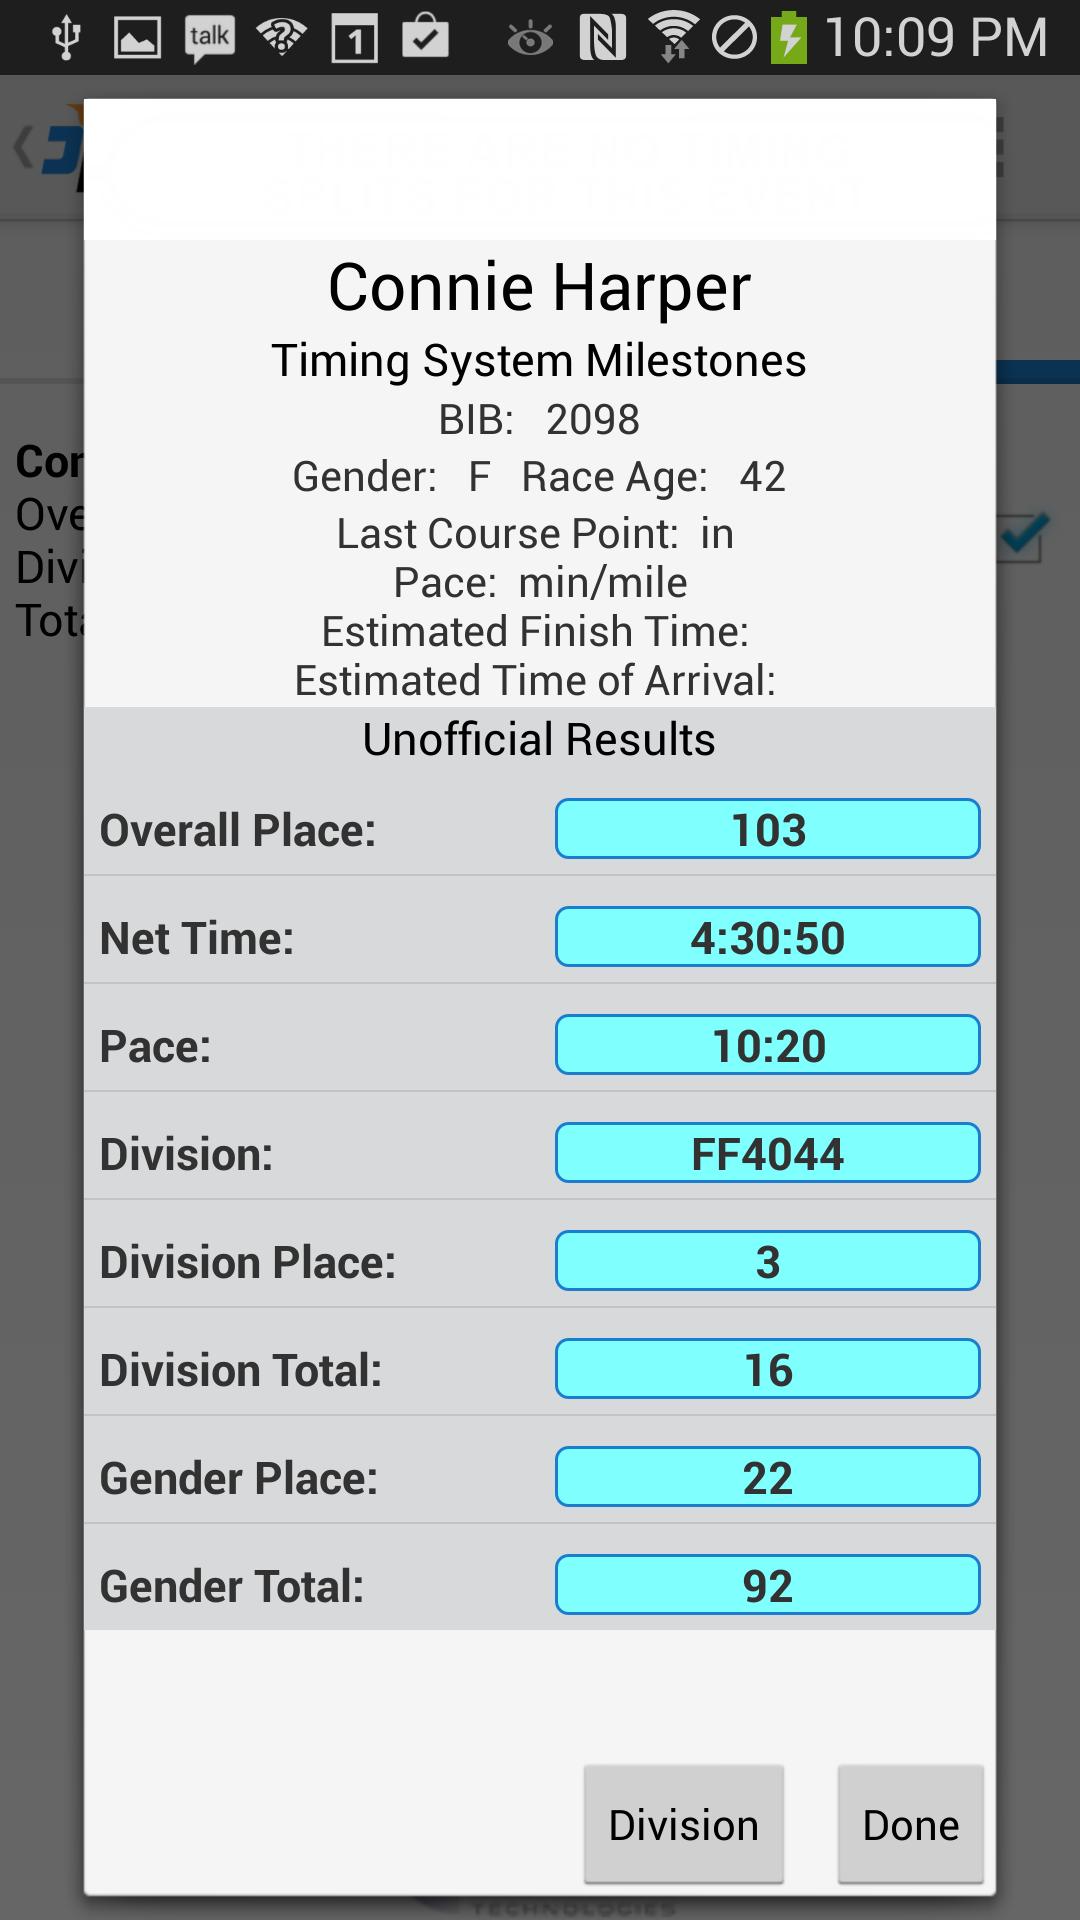 RaceJoy (Race Joy) 3.1.280 Screenshot 6